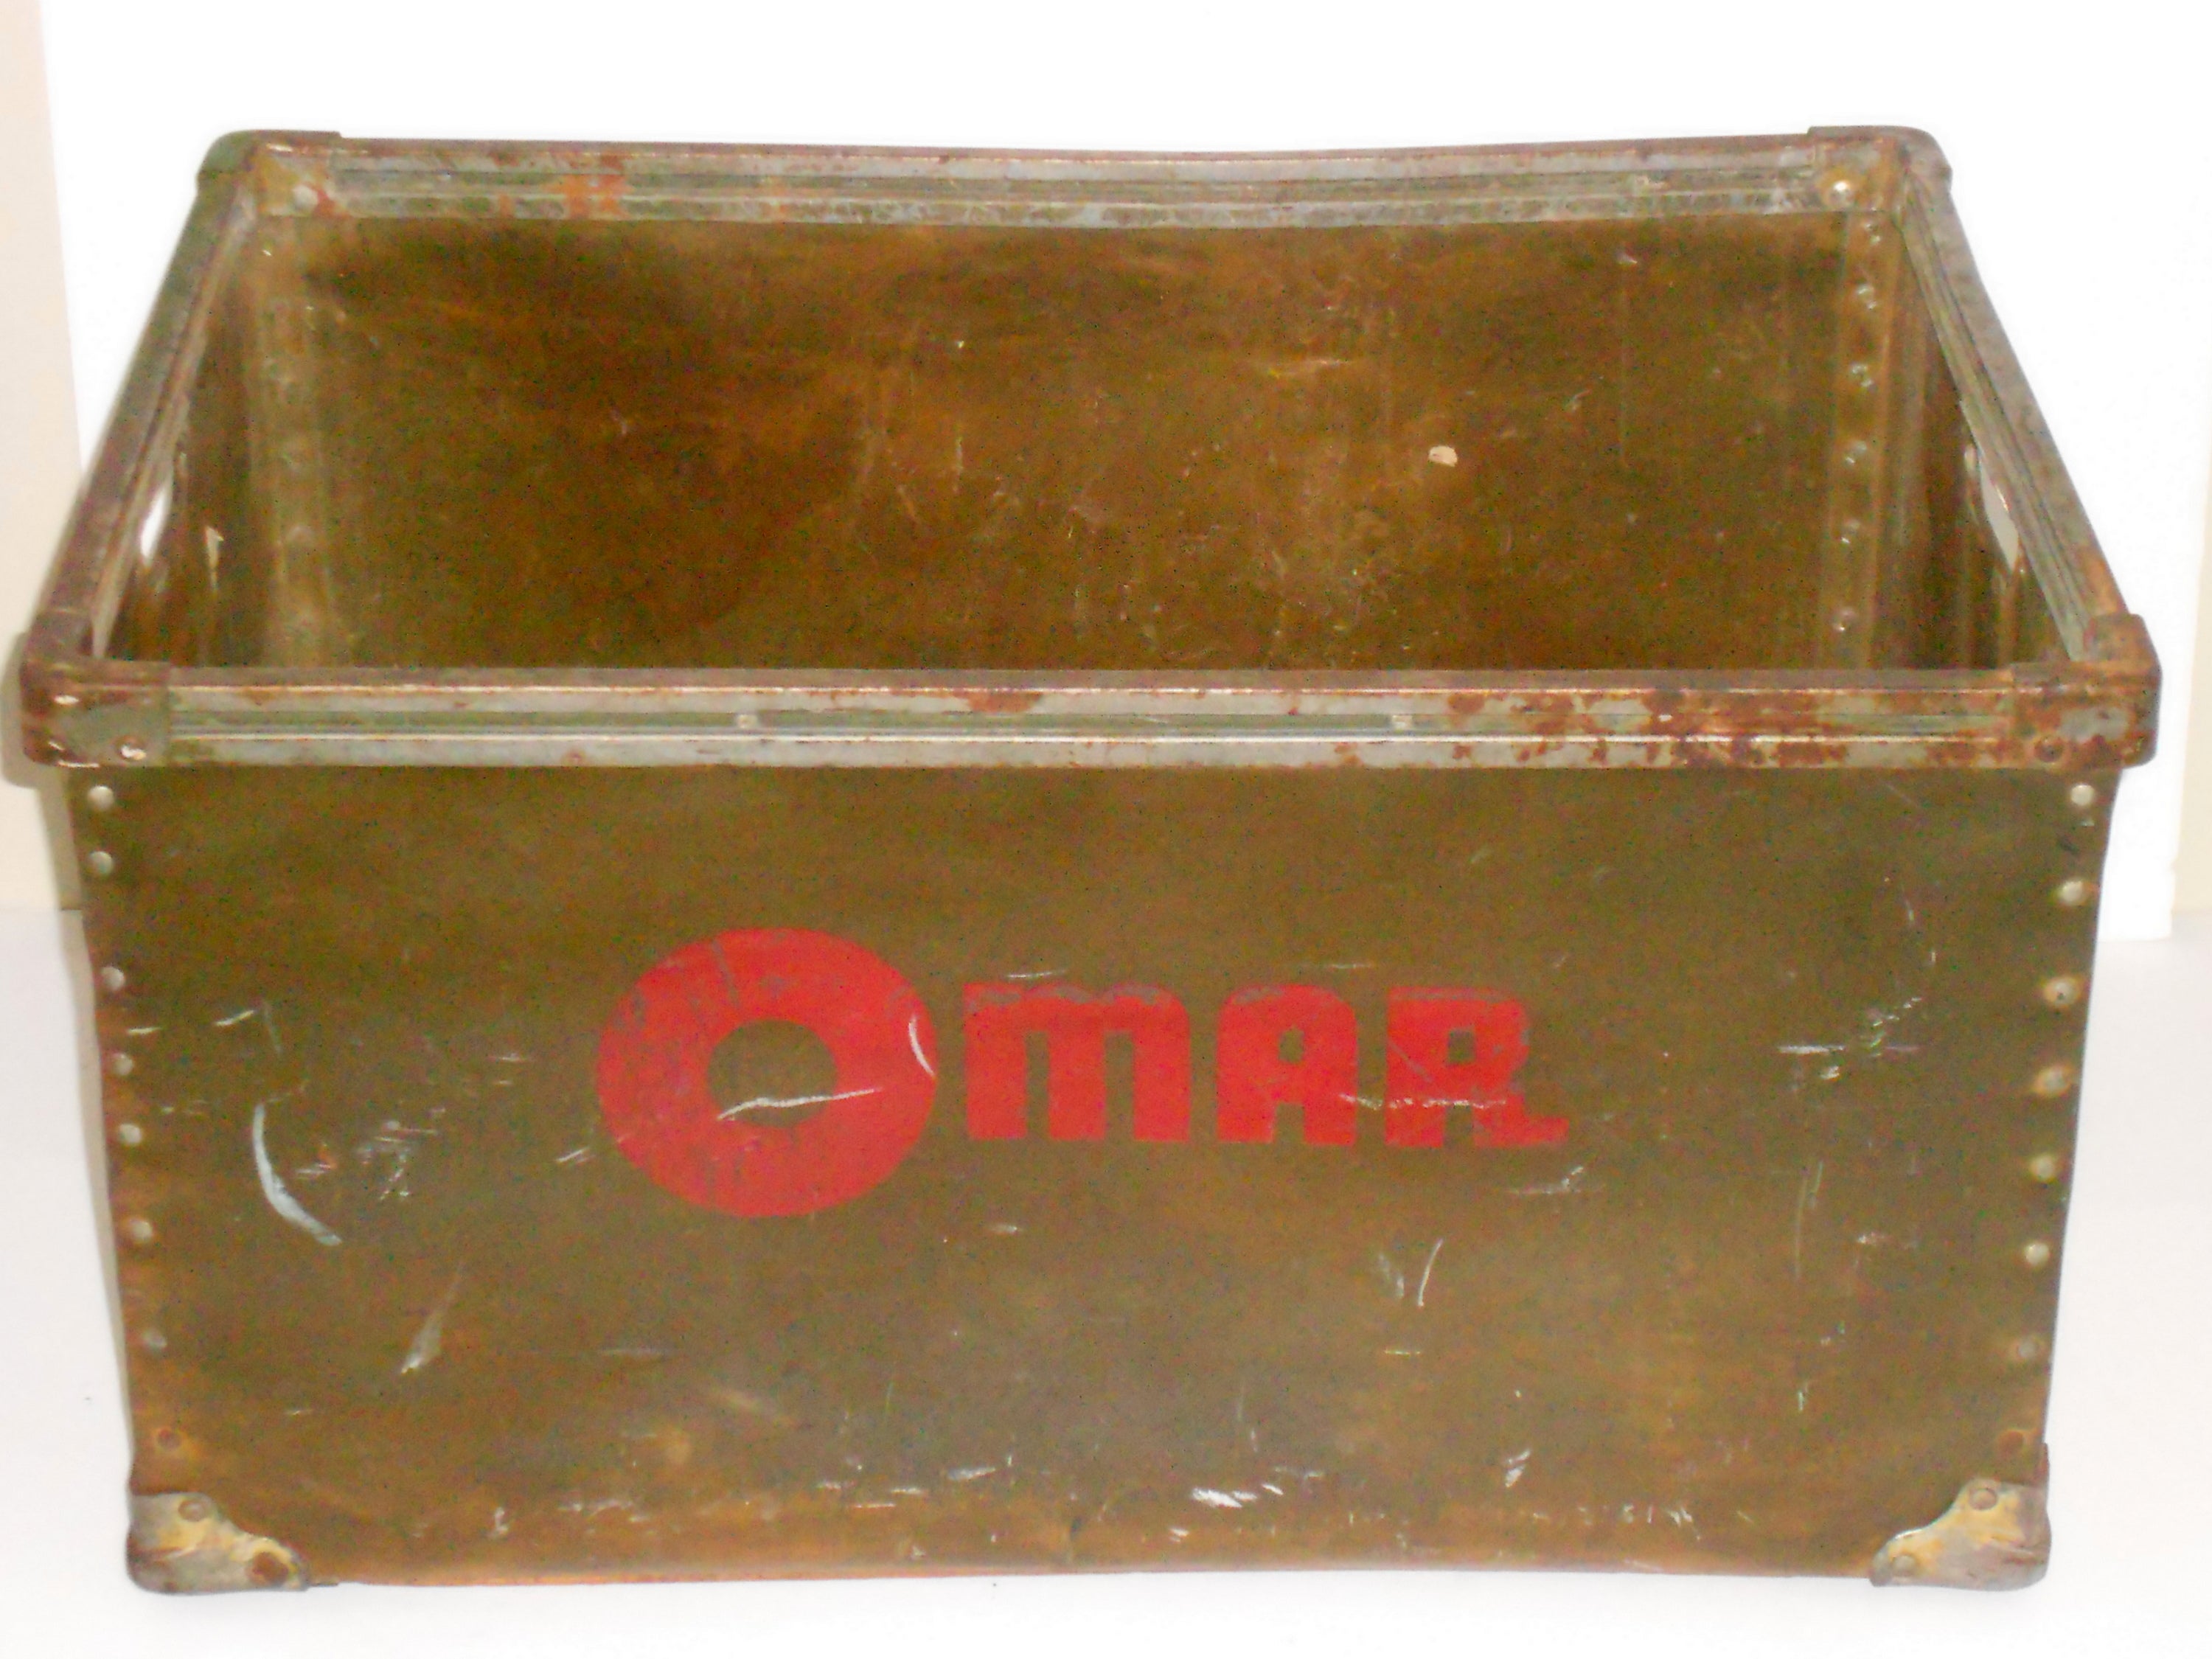 1930s Bread Shipping Bin from the Omar Baking Company